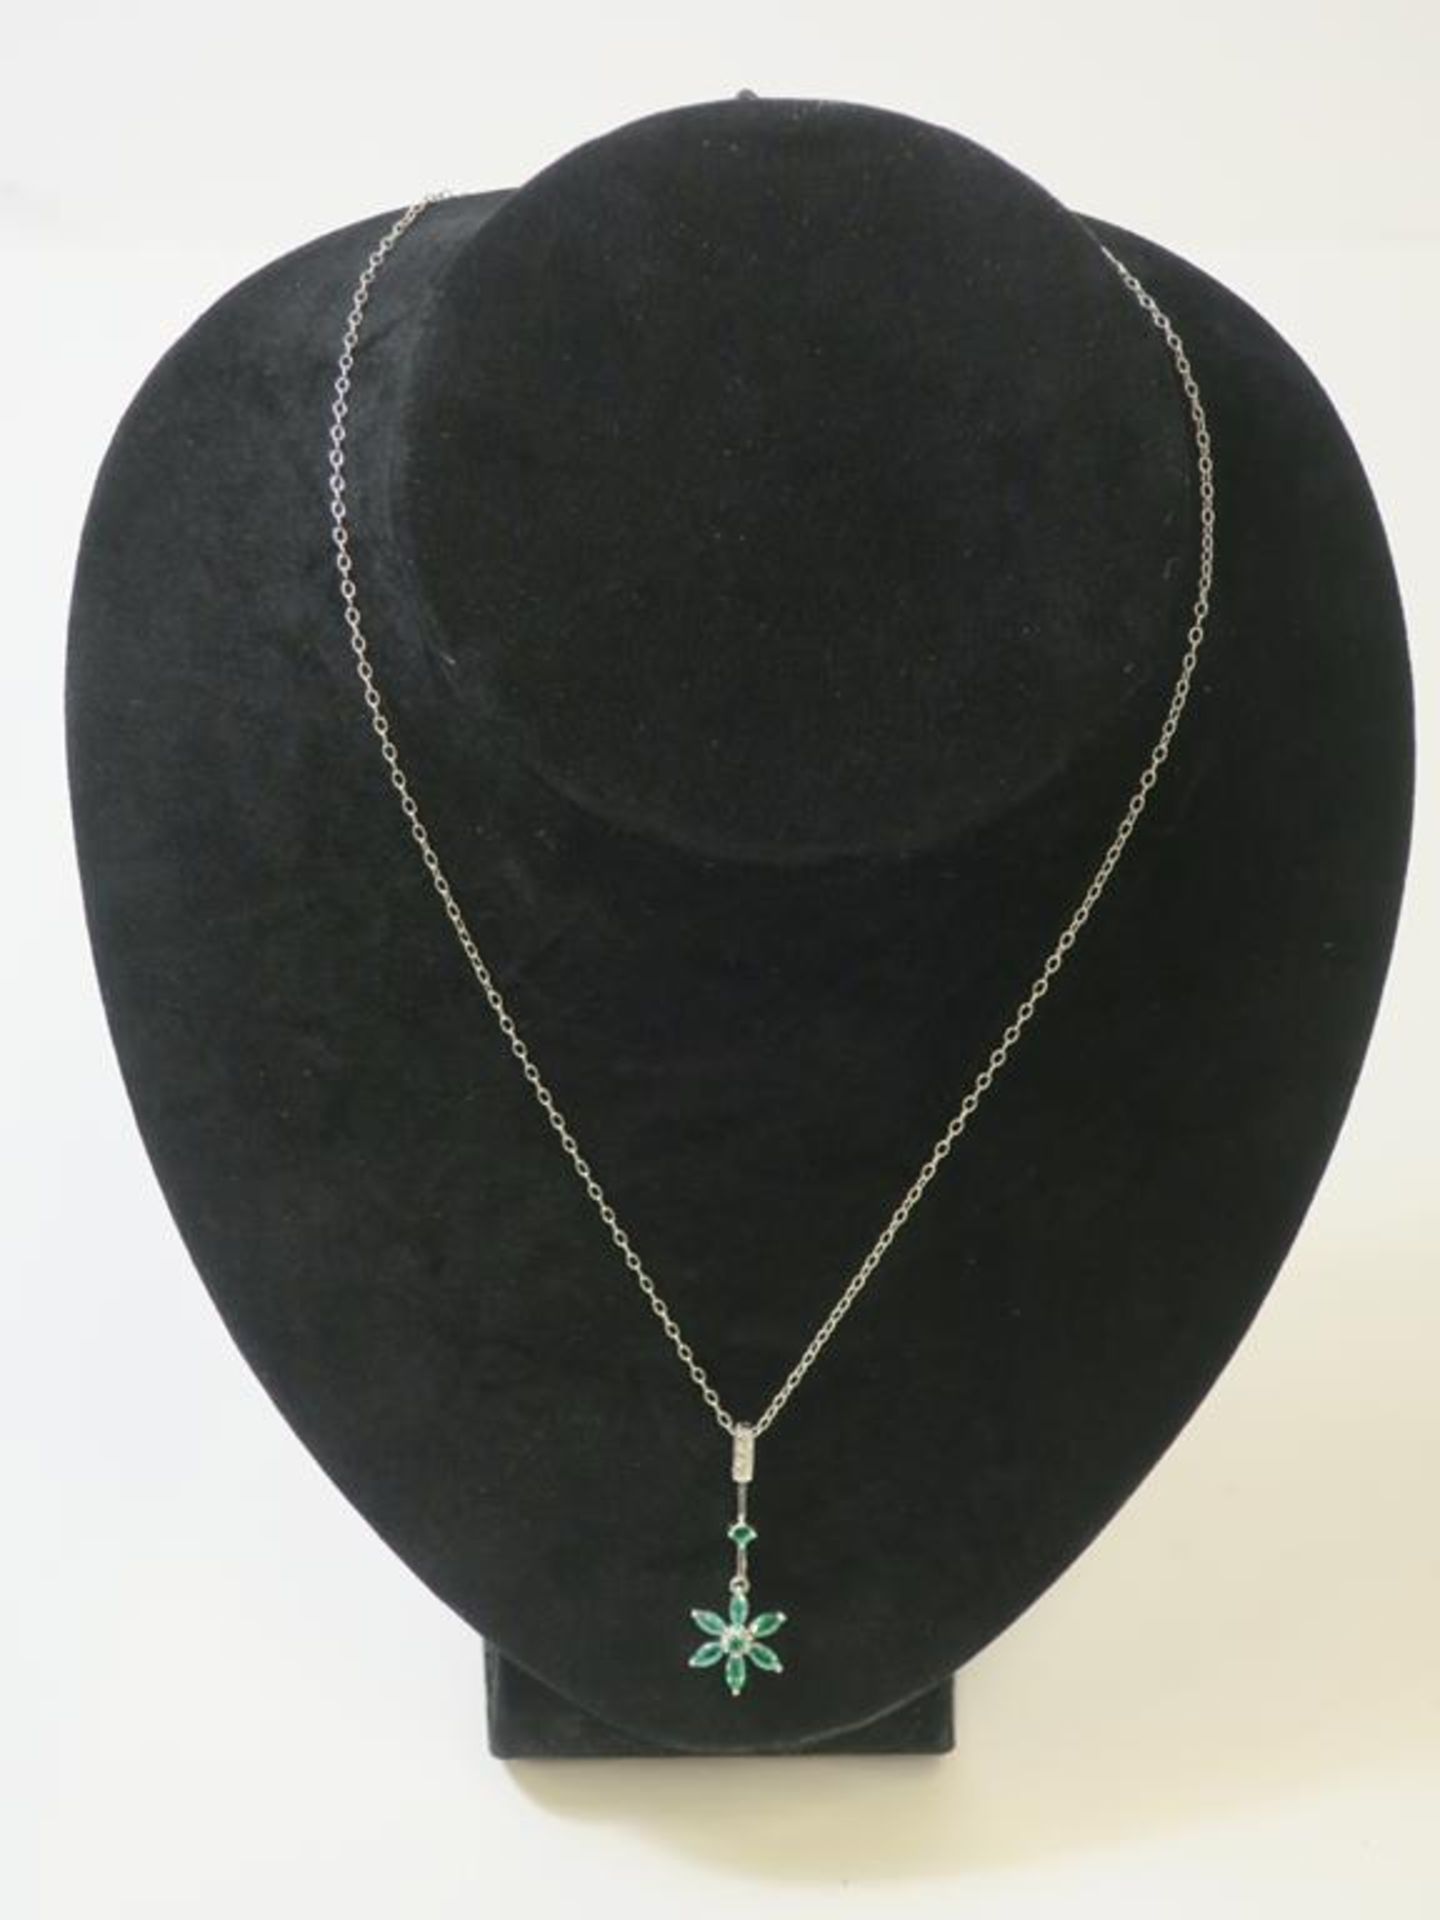 A Silver, Emerald and Diamond Necklace (est £40-£80)